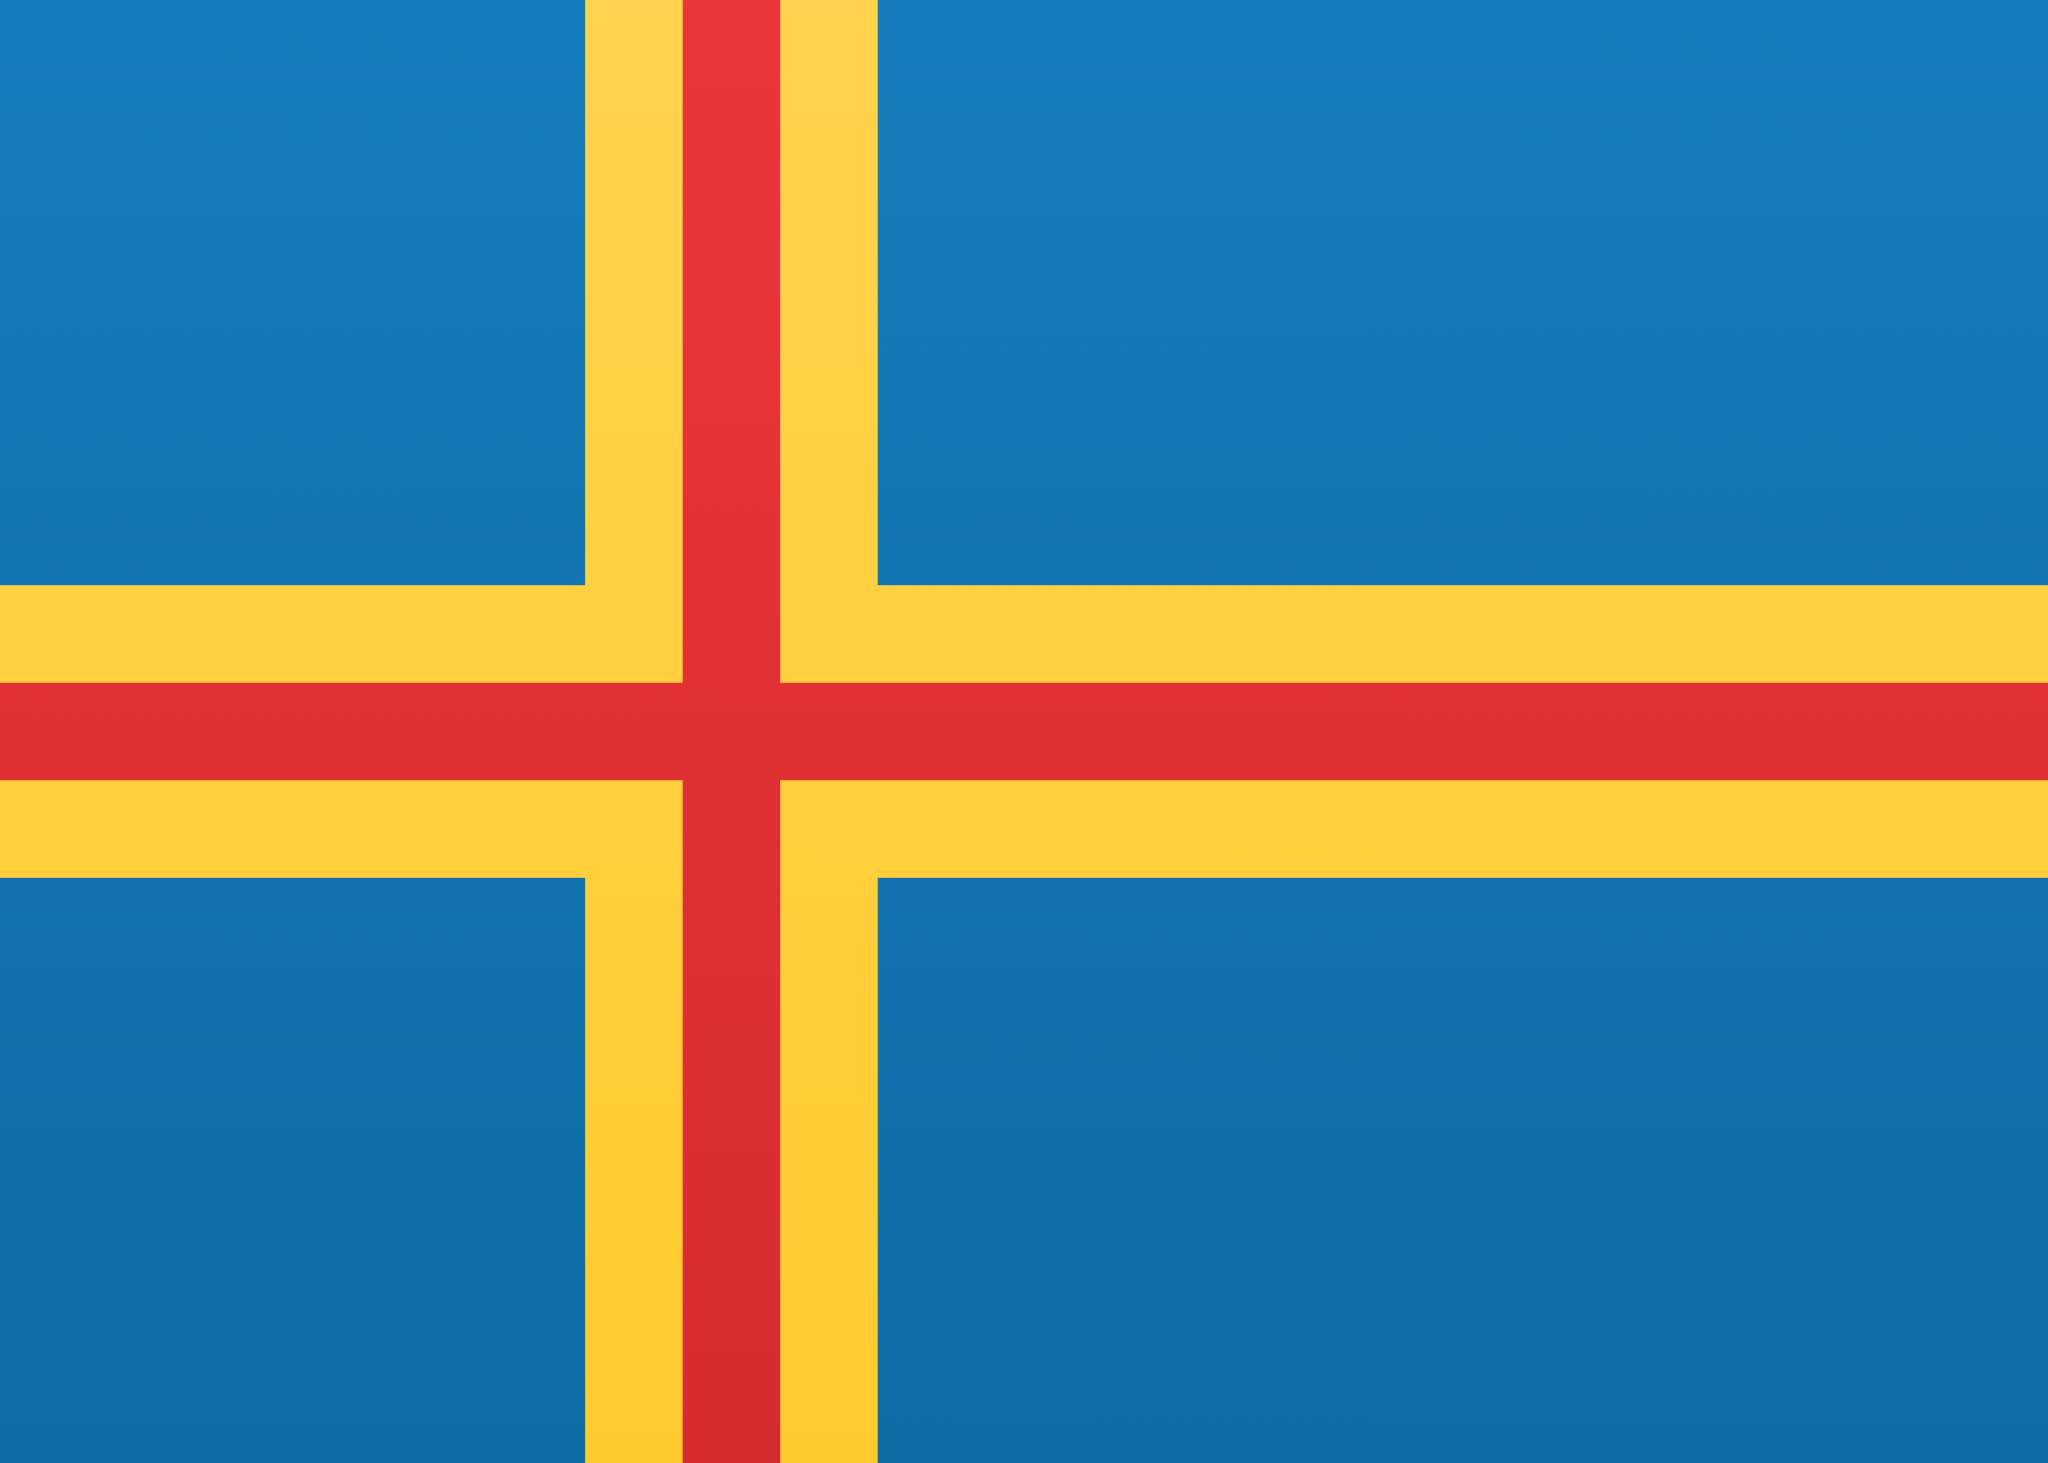 Åland Islands icon